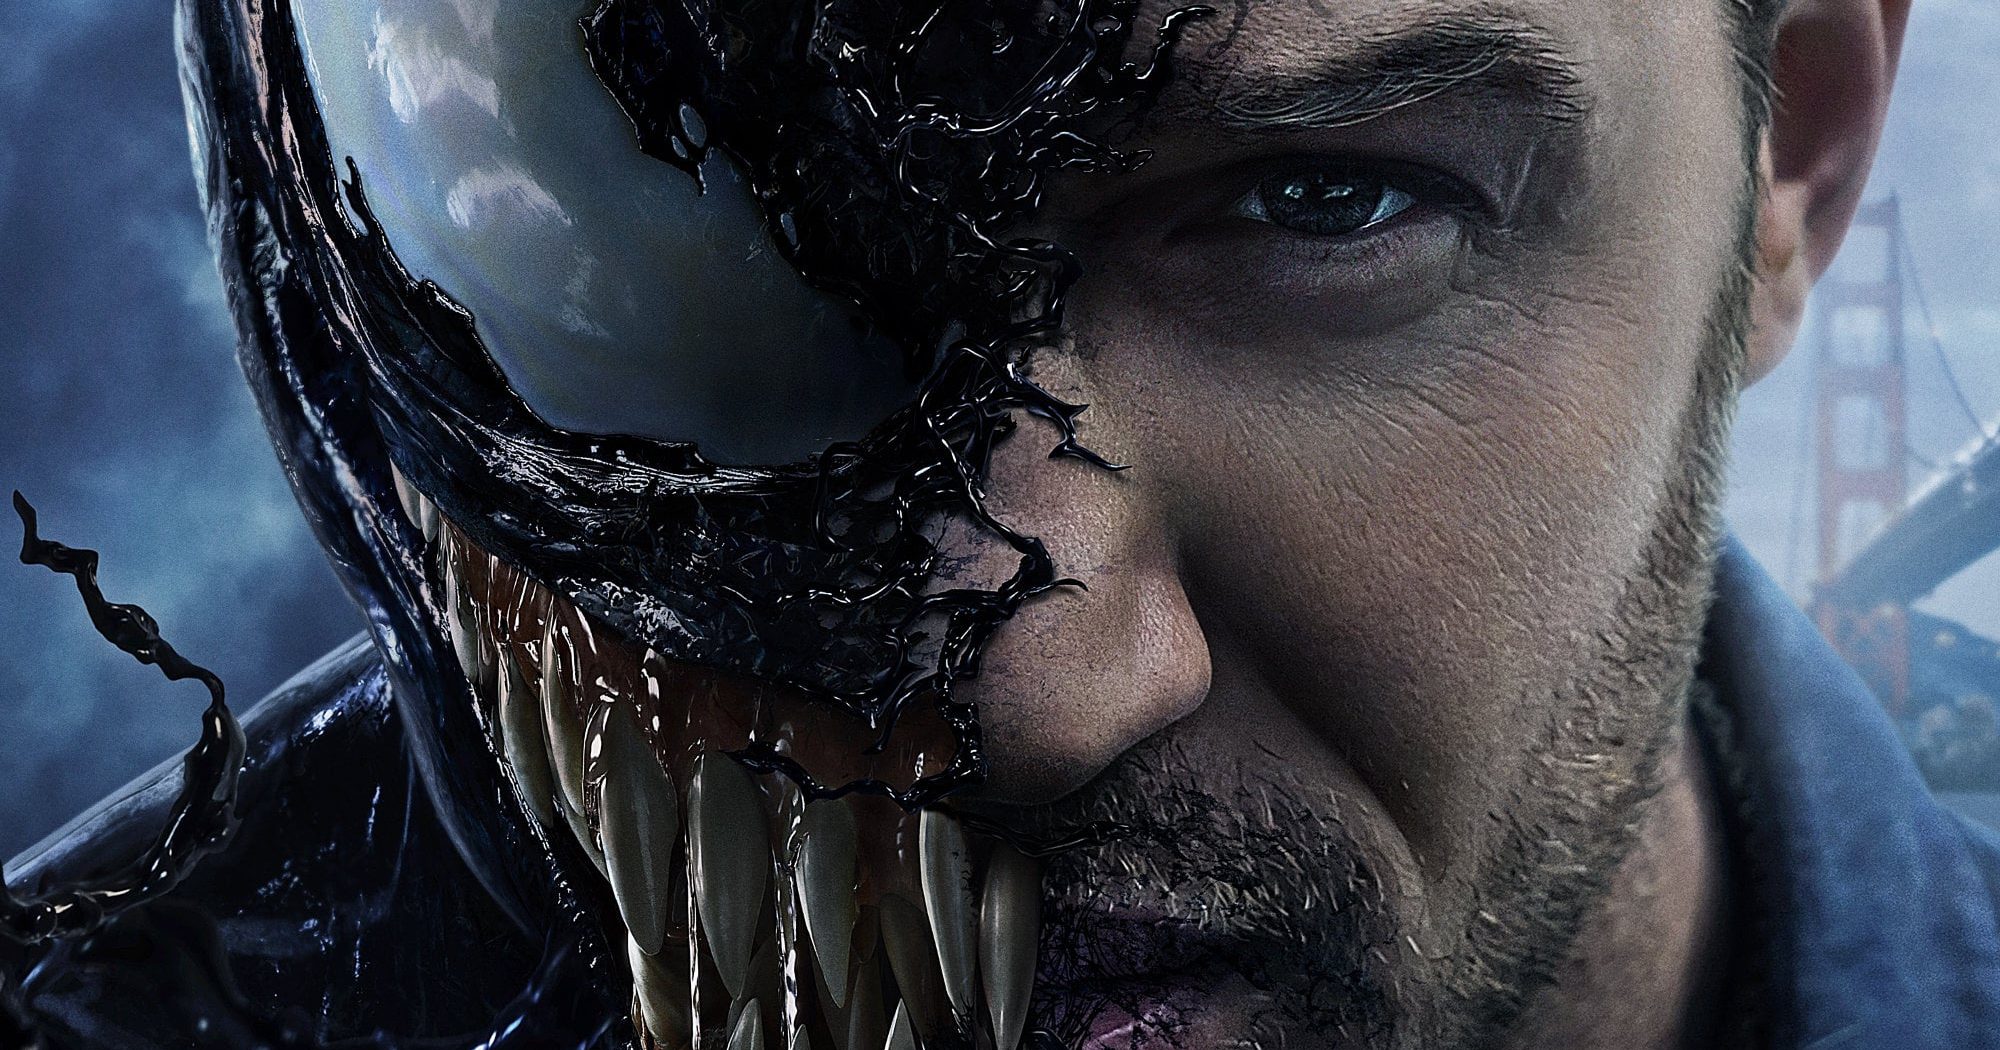 Poster for the movie "Venom"